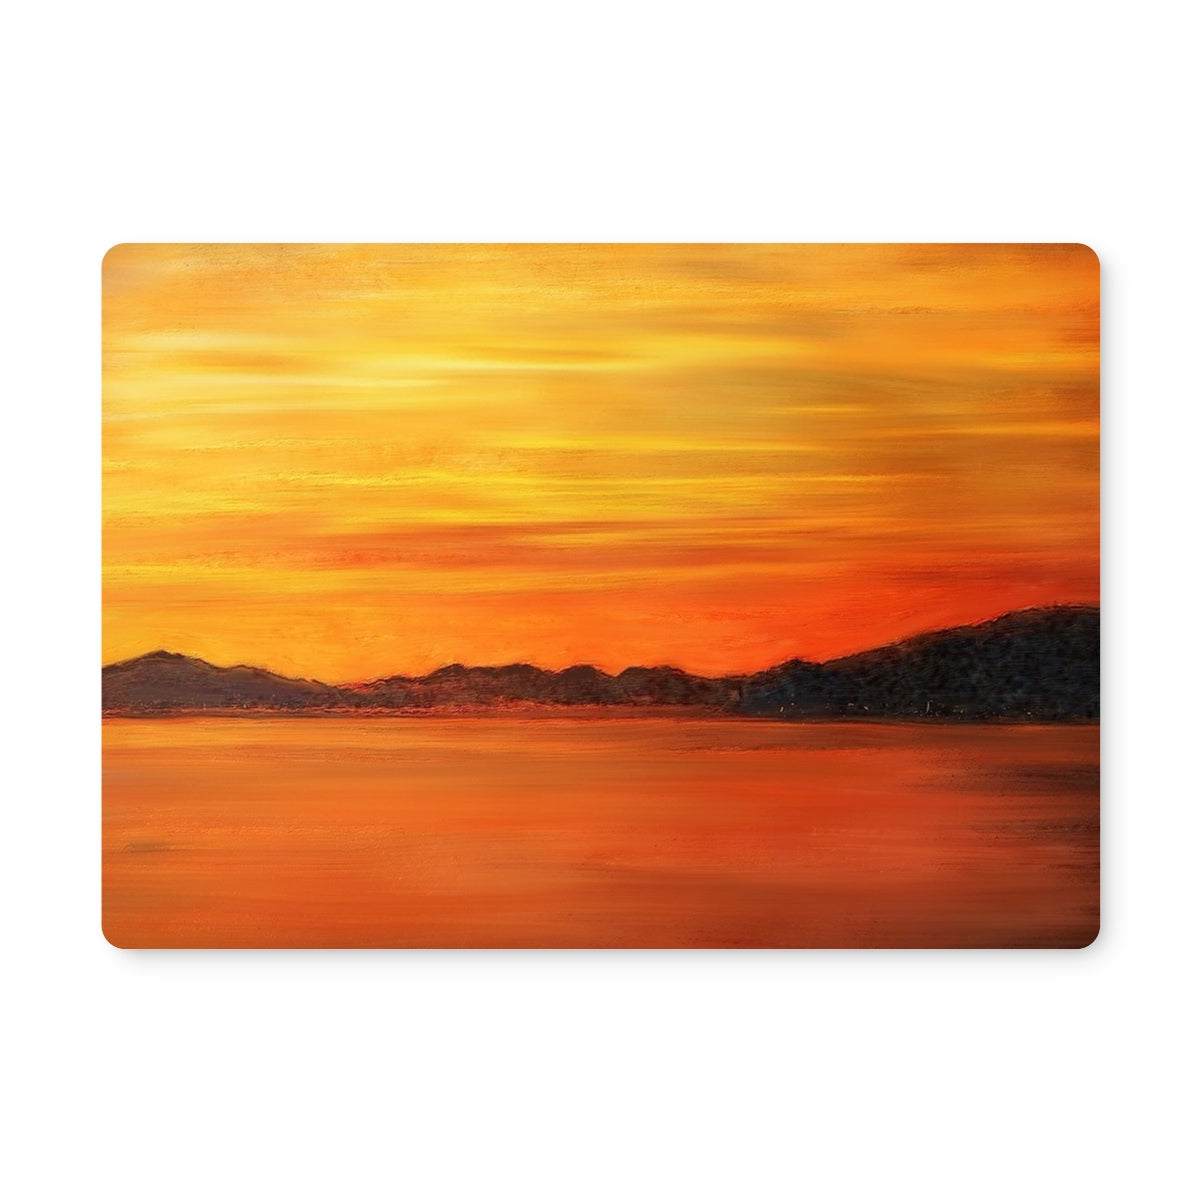 Loch Fyne Sunset Art Gifts Placemat